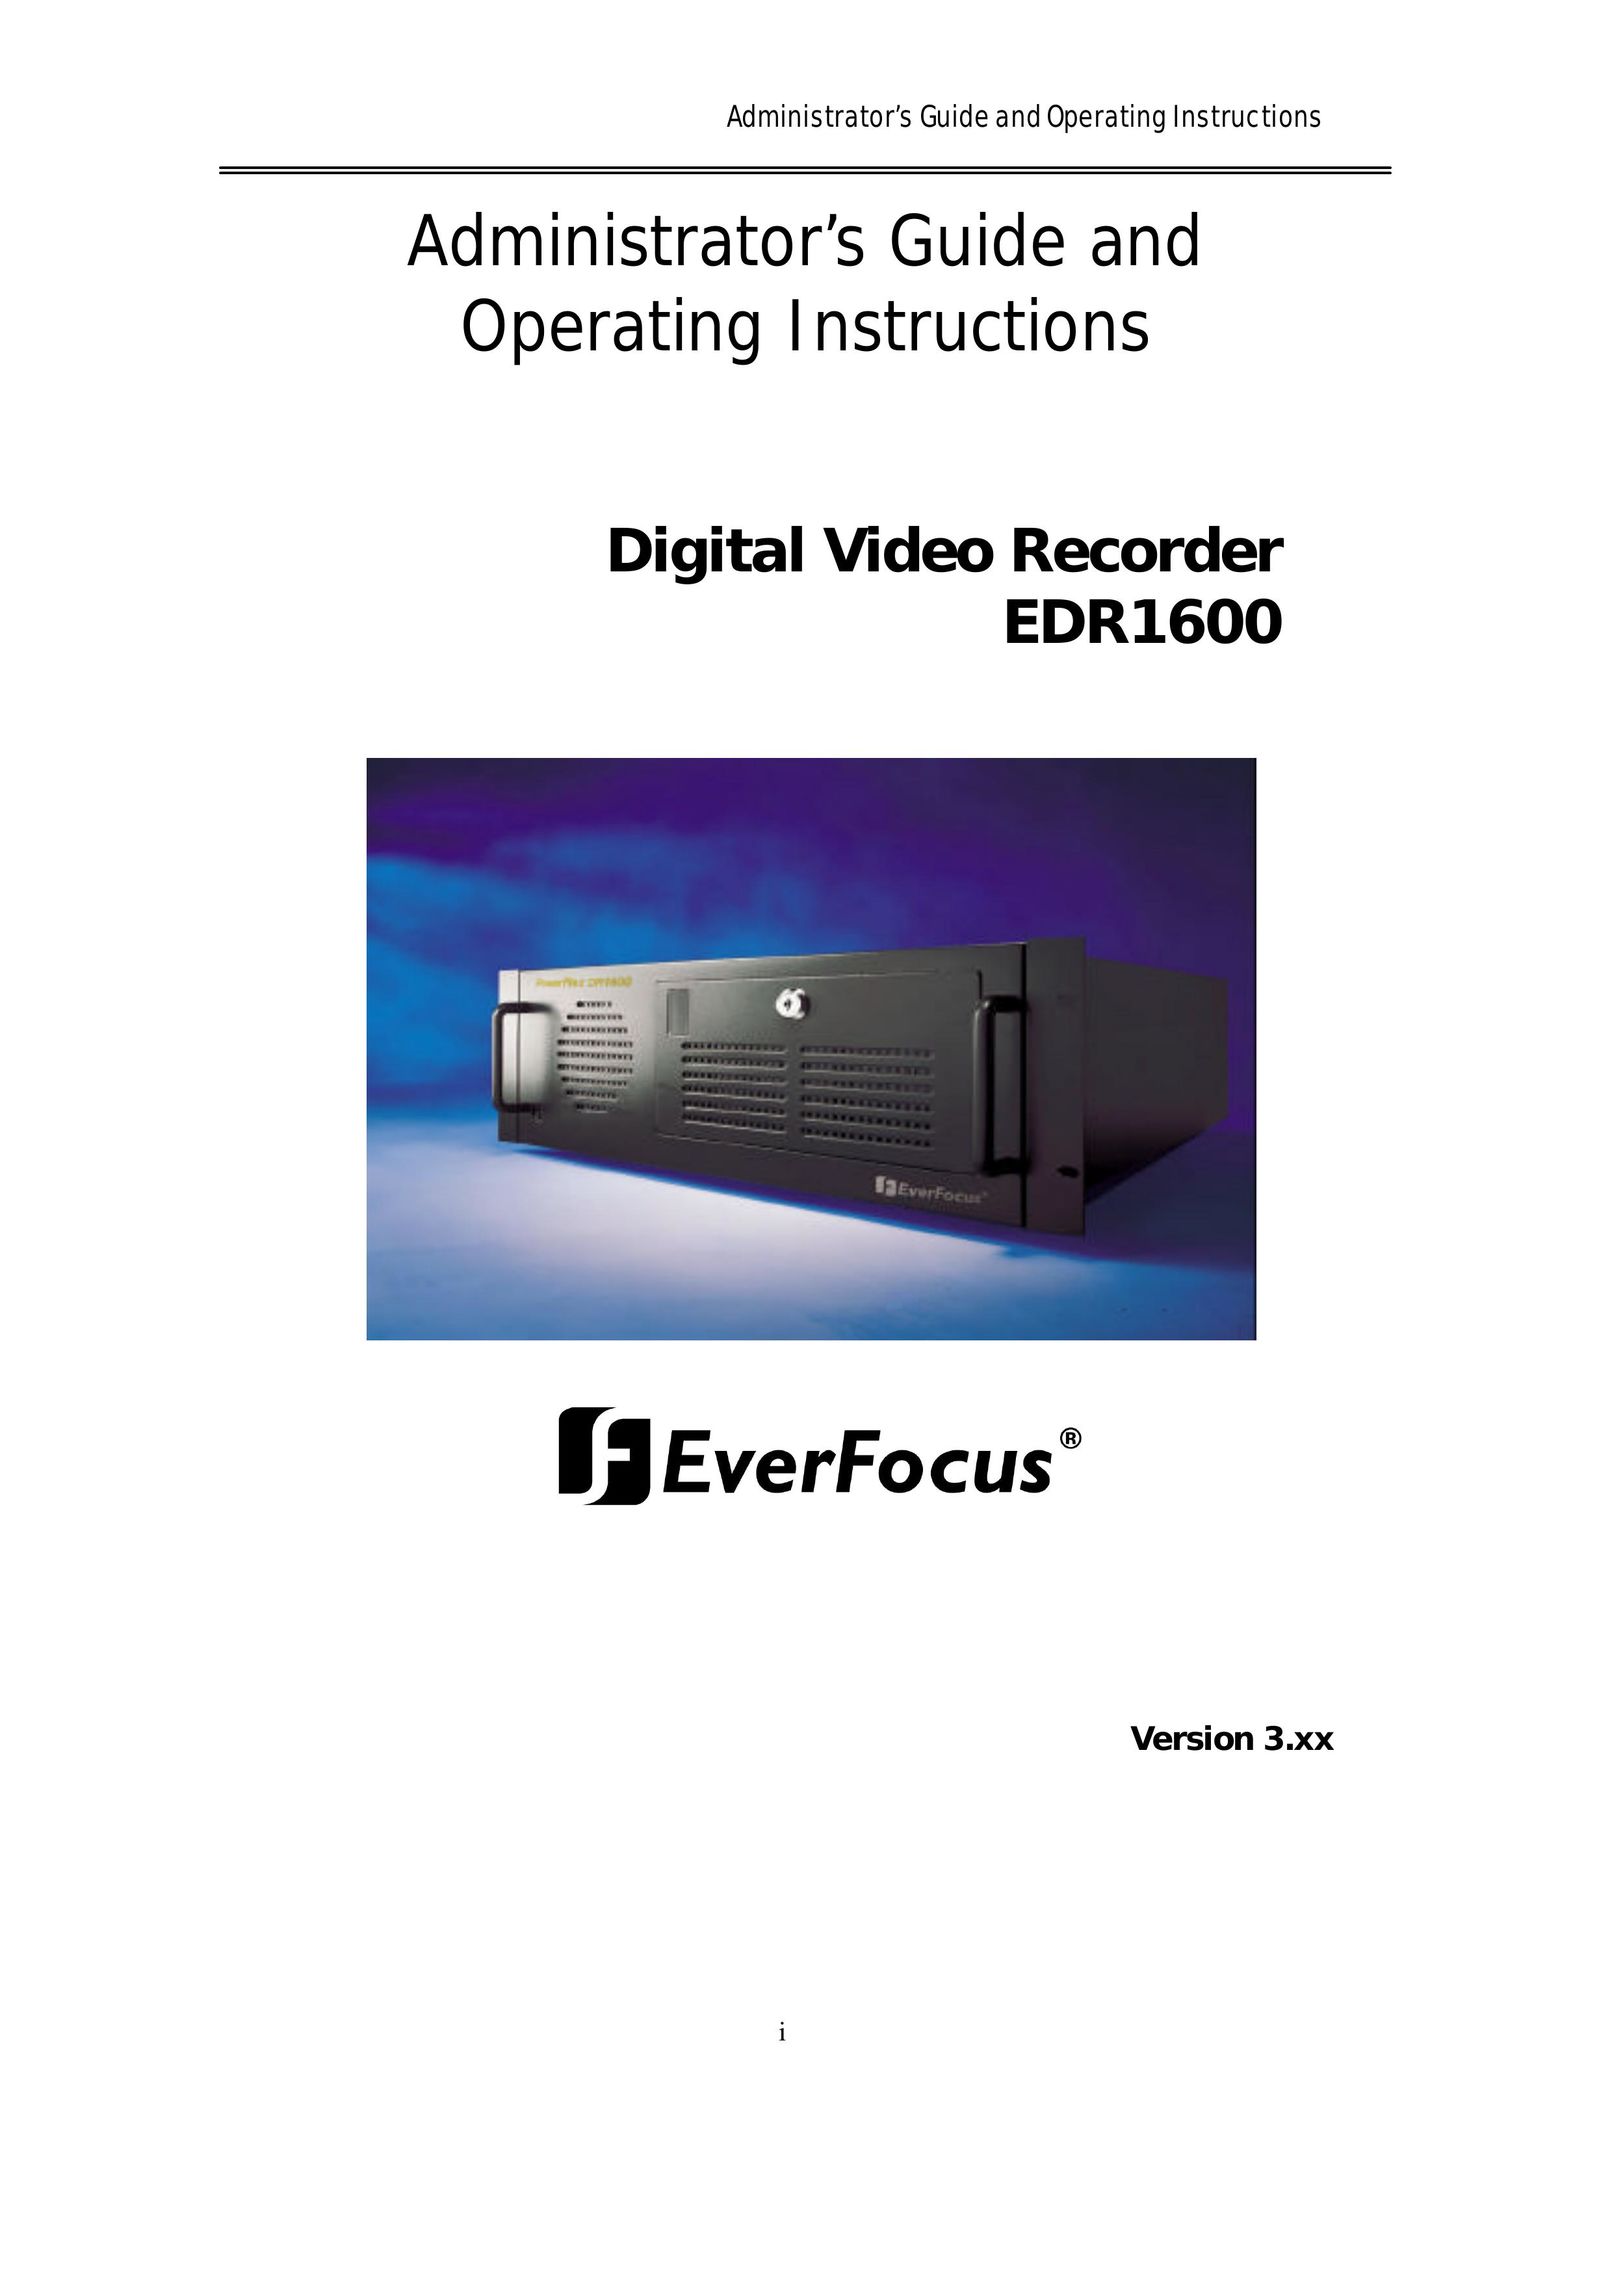 EverFocus EDR1600 DVR User Manual